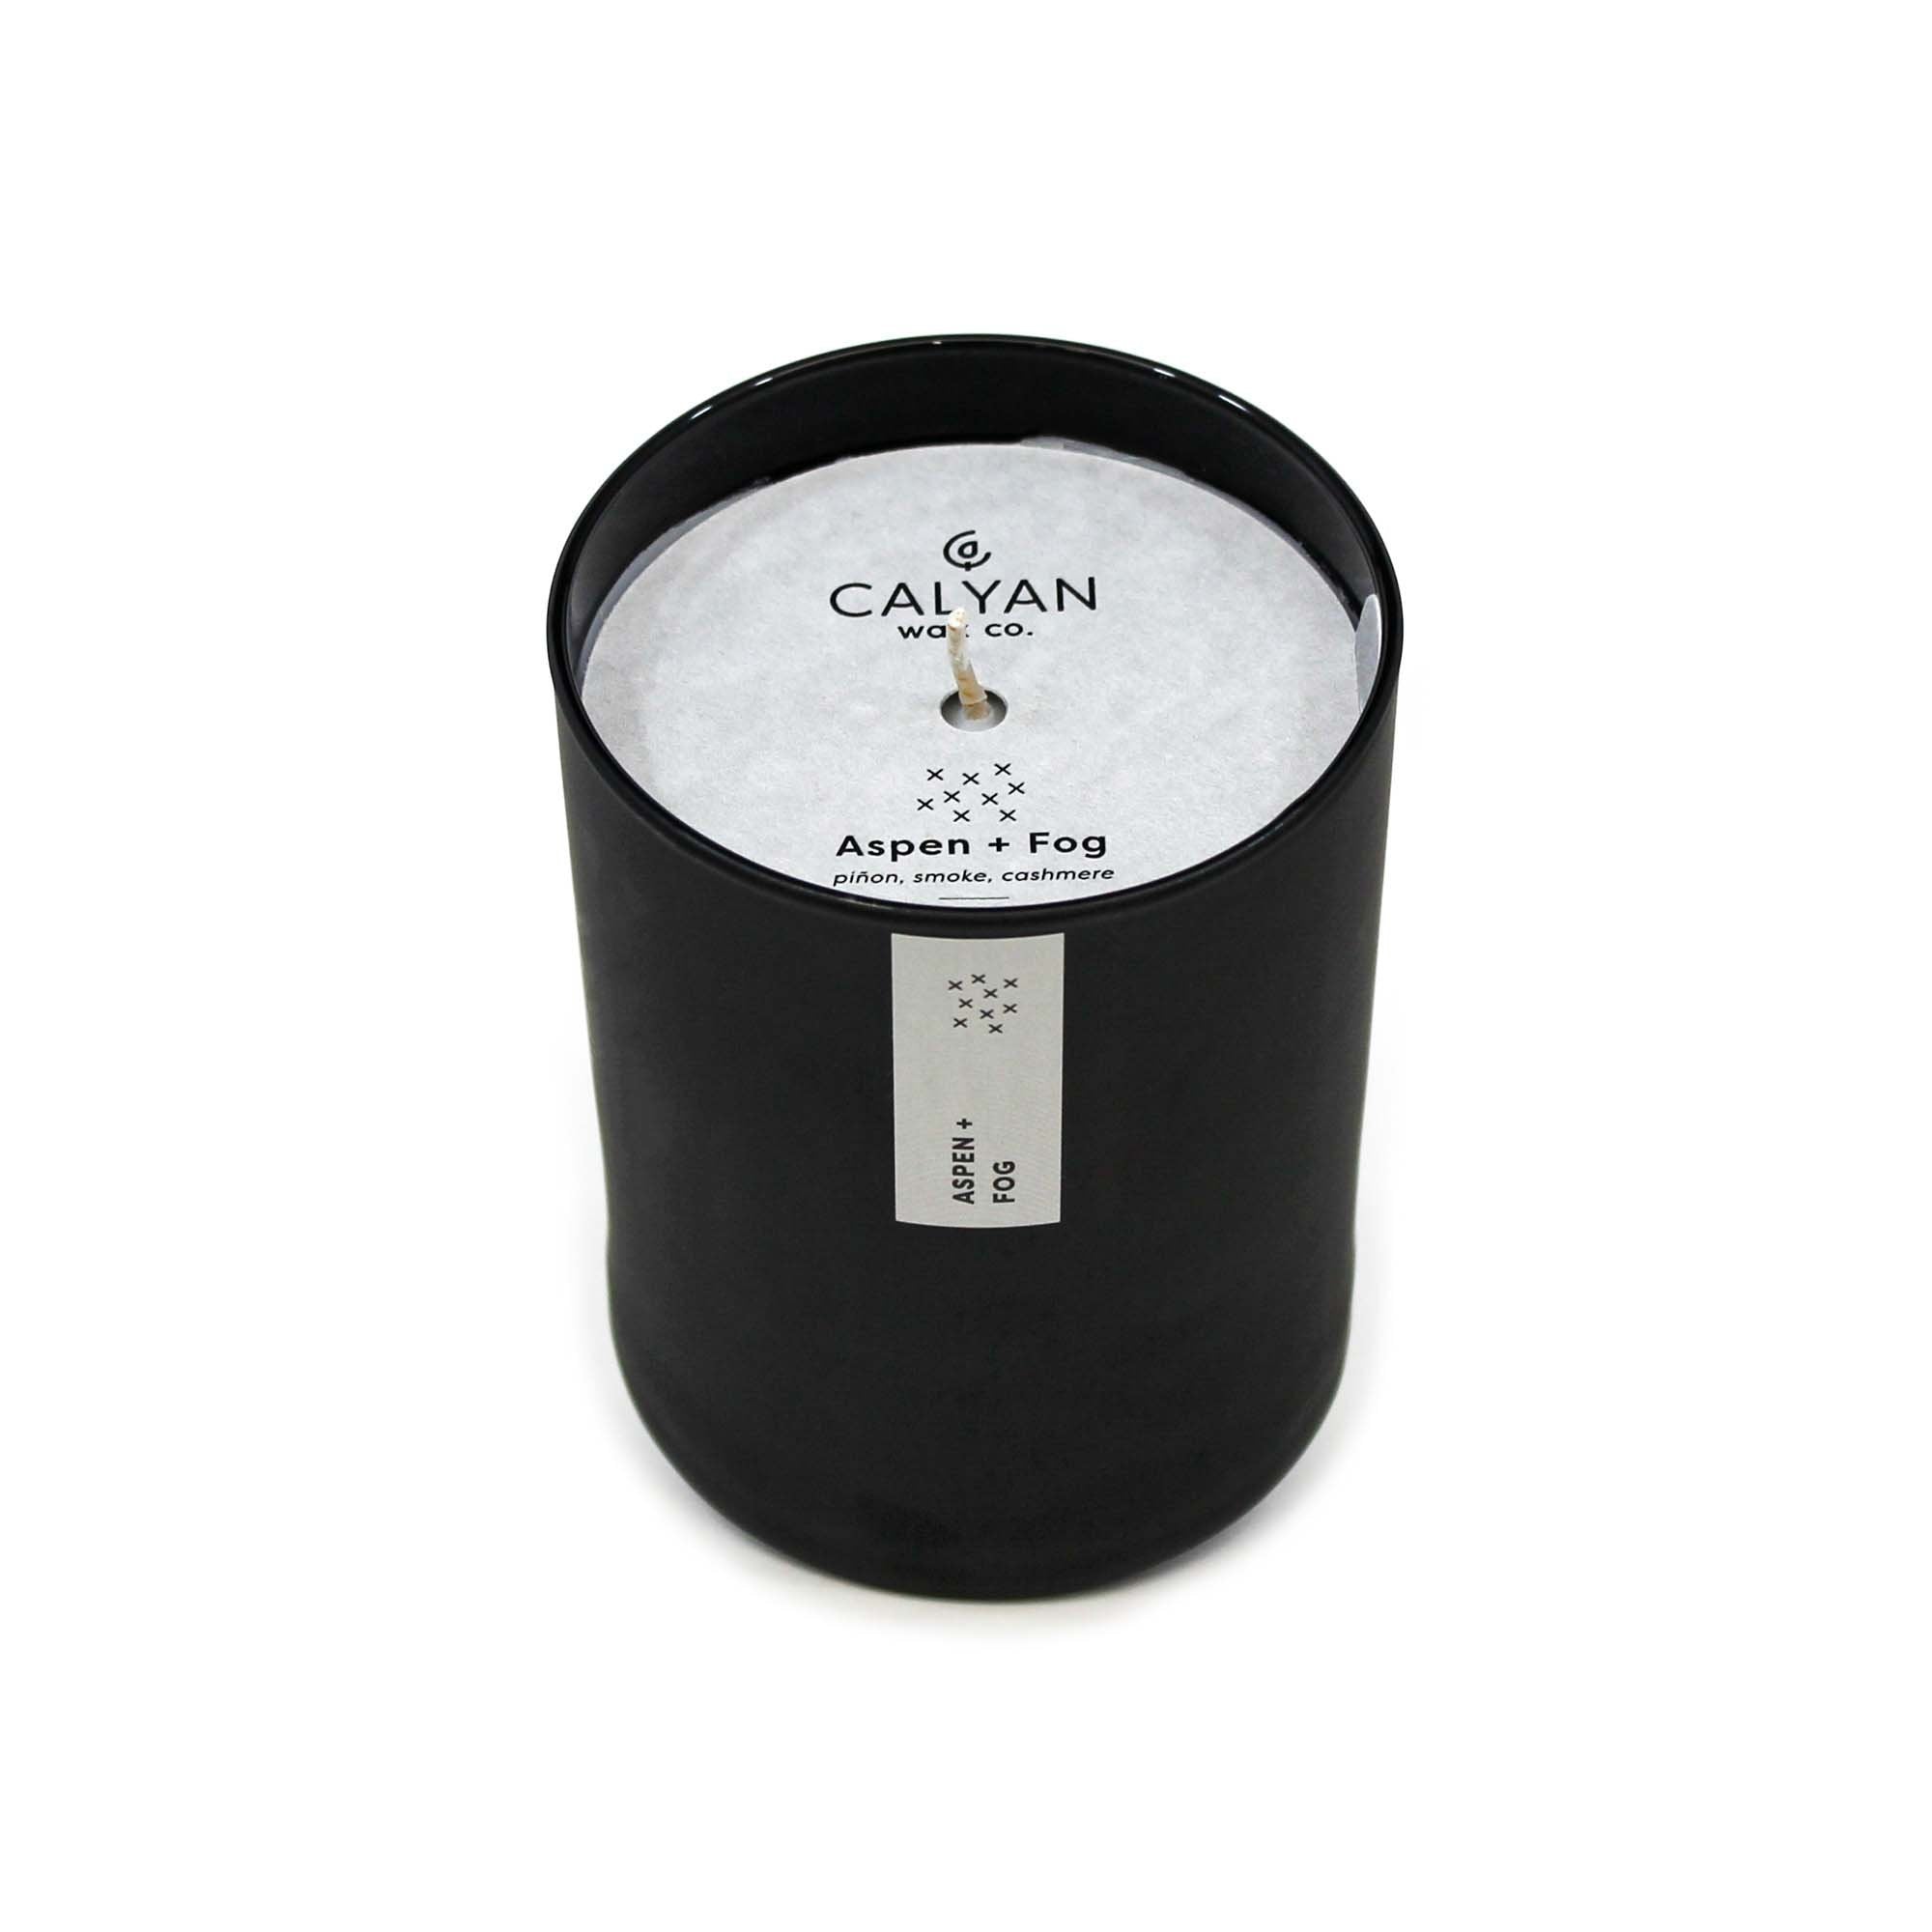 Black matte glass tumbler candle Aspen + Fog fragrance from Calyan Wax Company